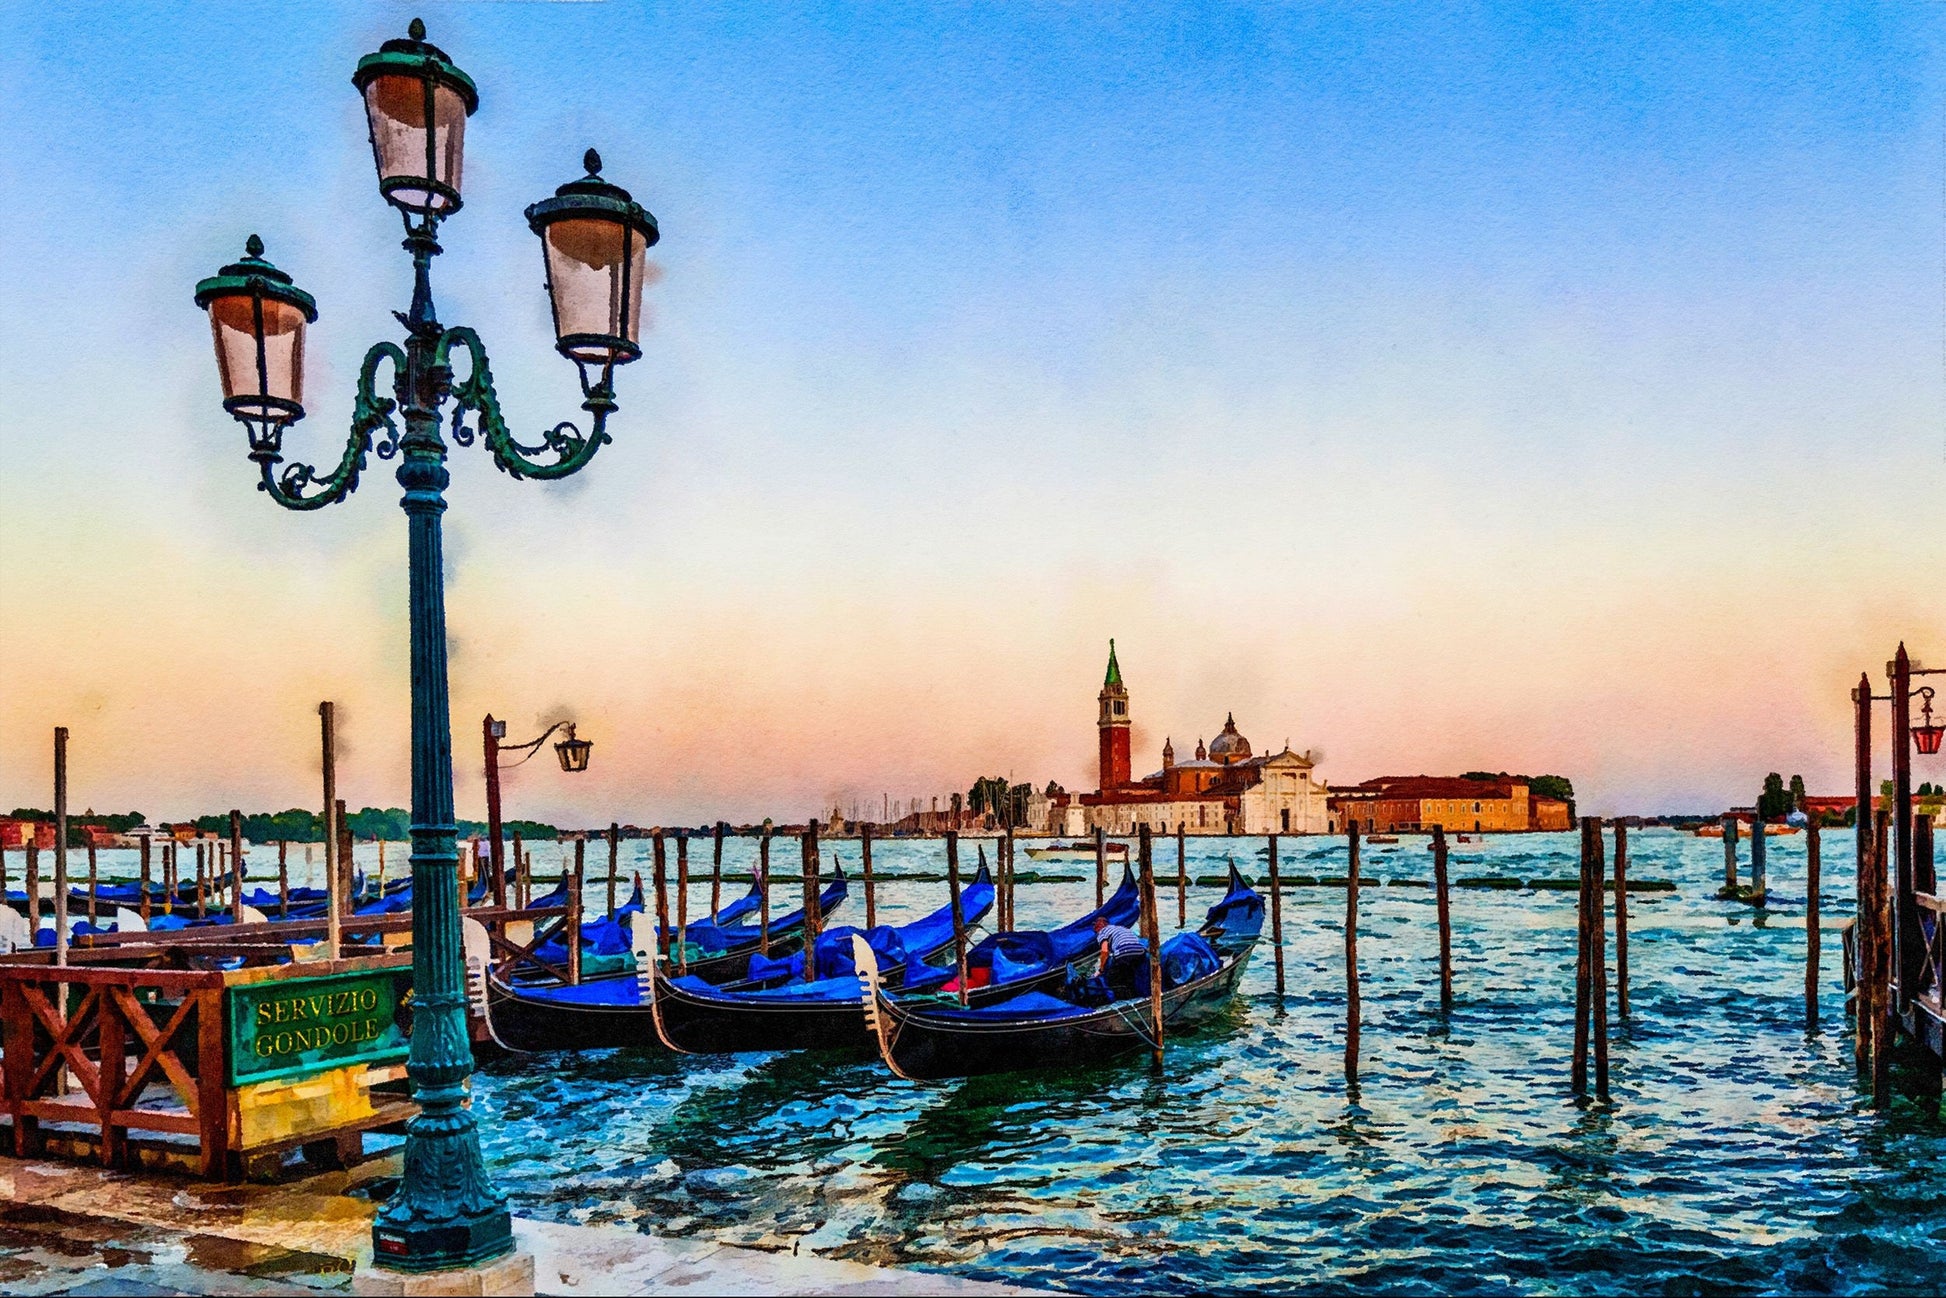 Giclée Print Venice Grand Canal Gondola, Print Wall Art, Watercolor Print, Wall Décor Living Room, Abstract Art Print, Blue, Modern Art